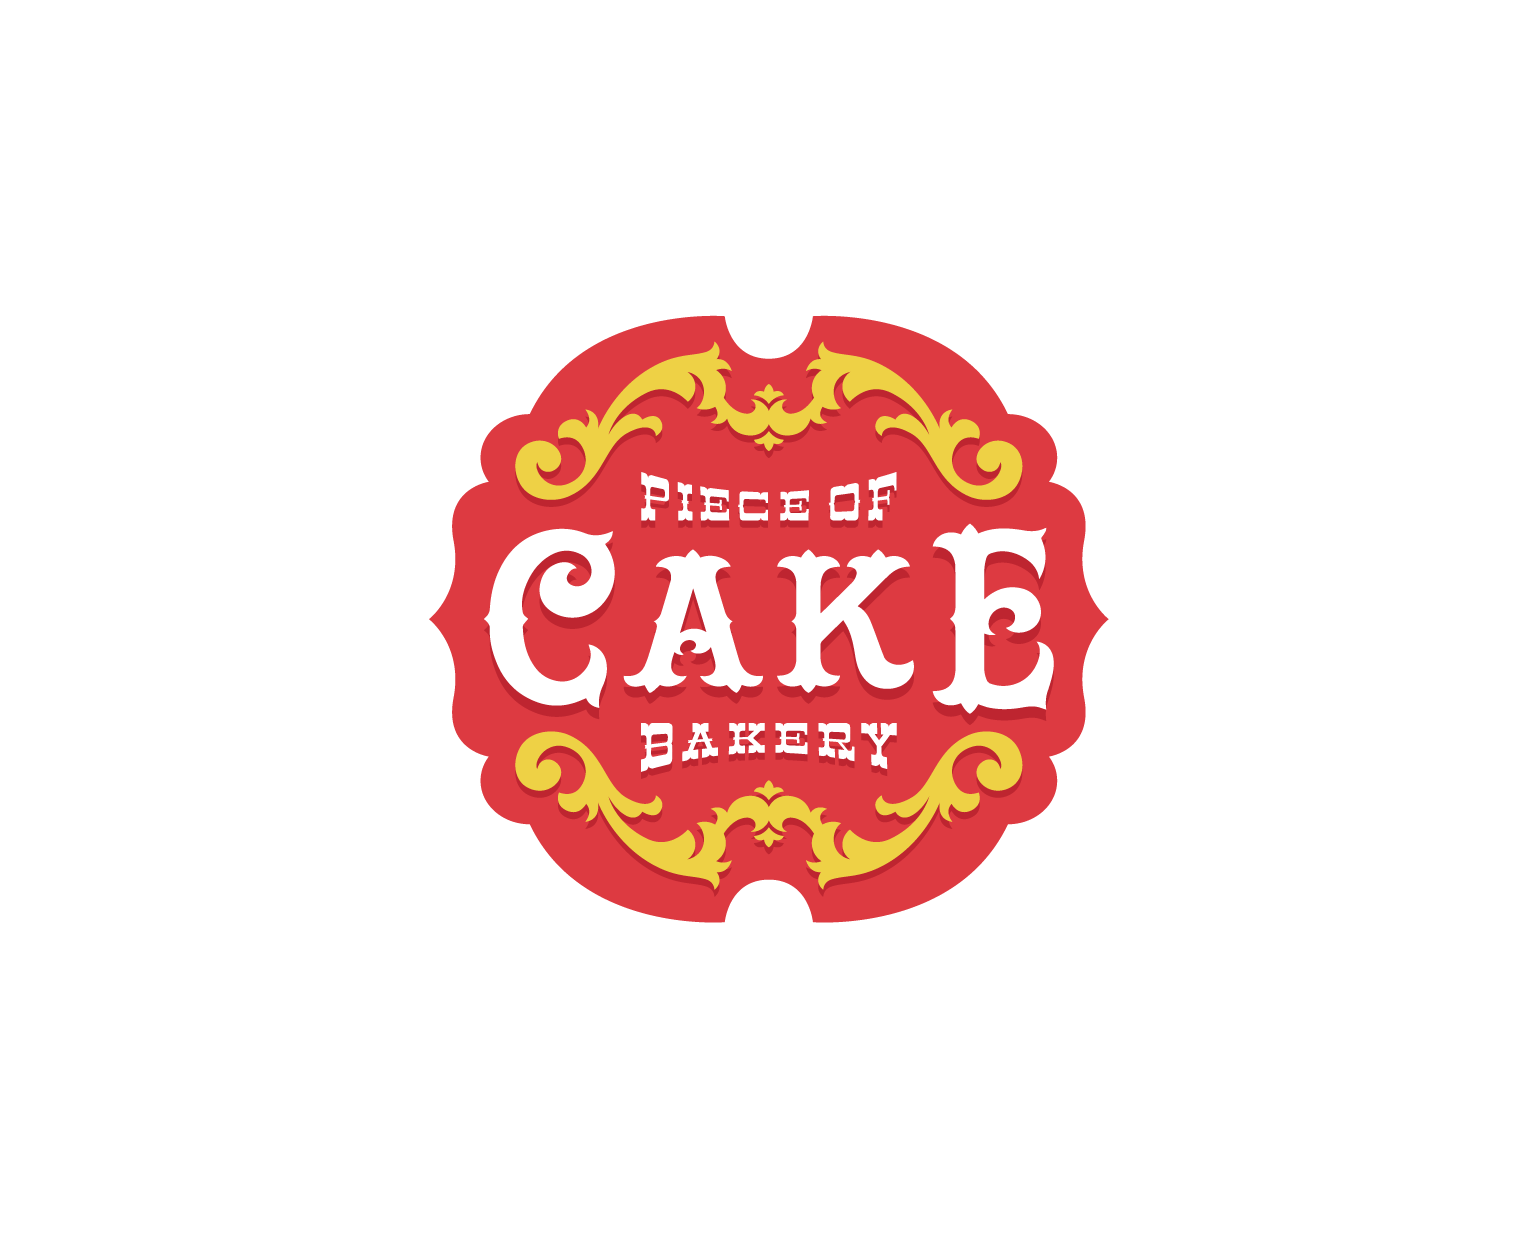 Piece of Cake Bakery - Brand development and logo design